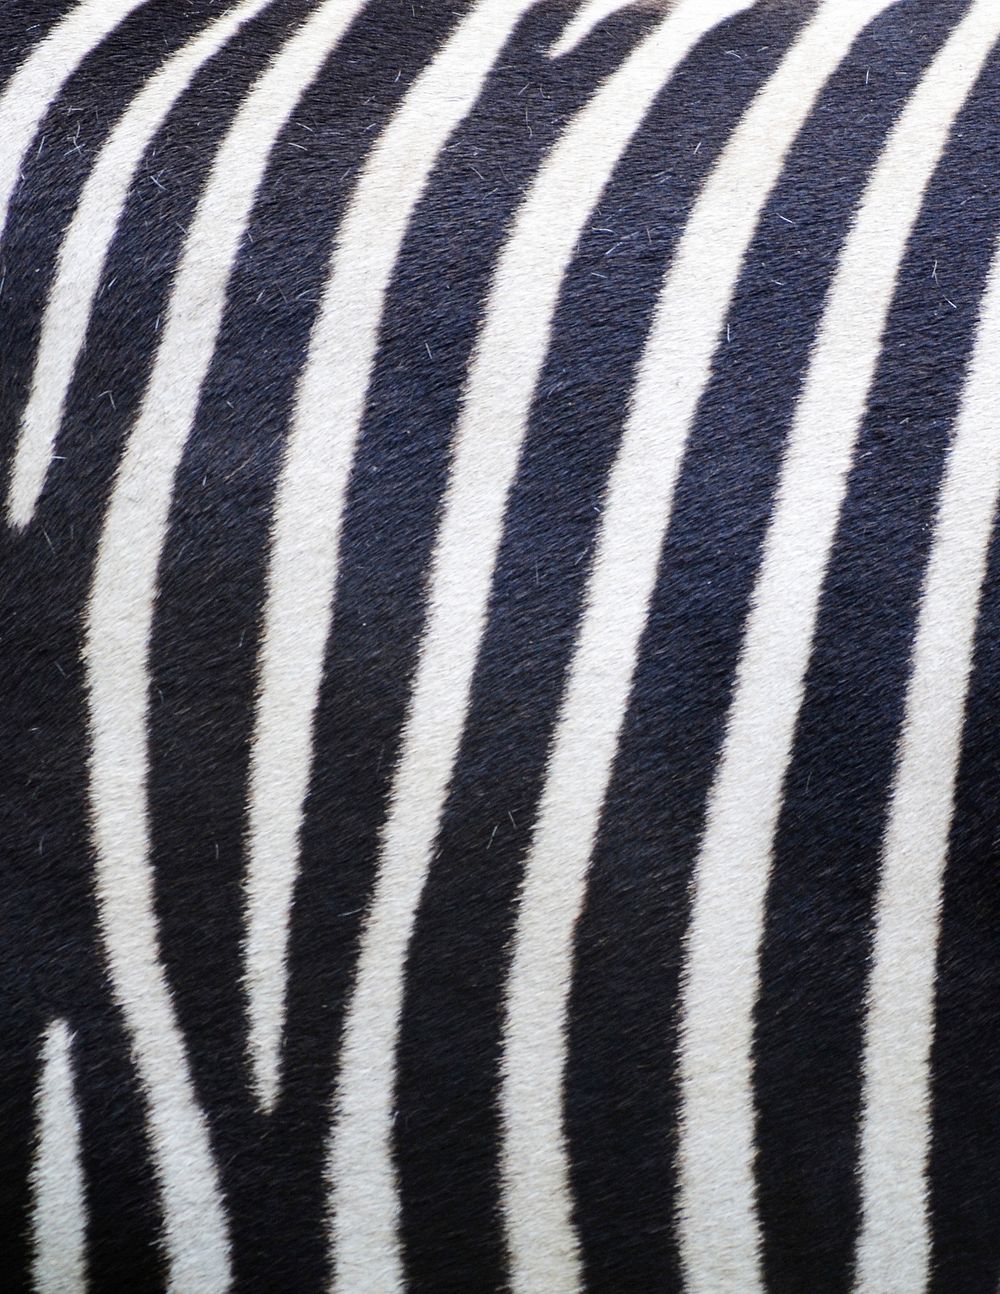 Stripe zebra pattern, animal close up background